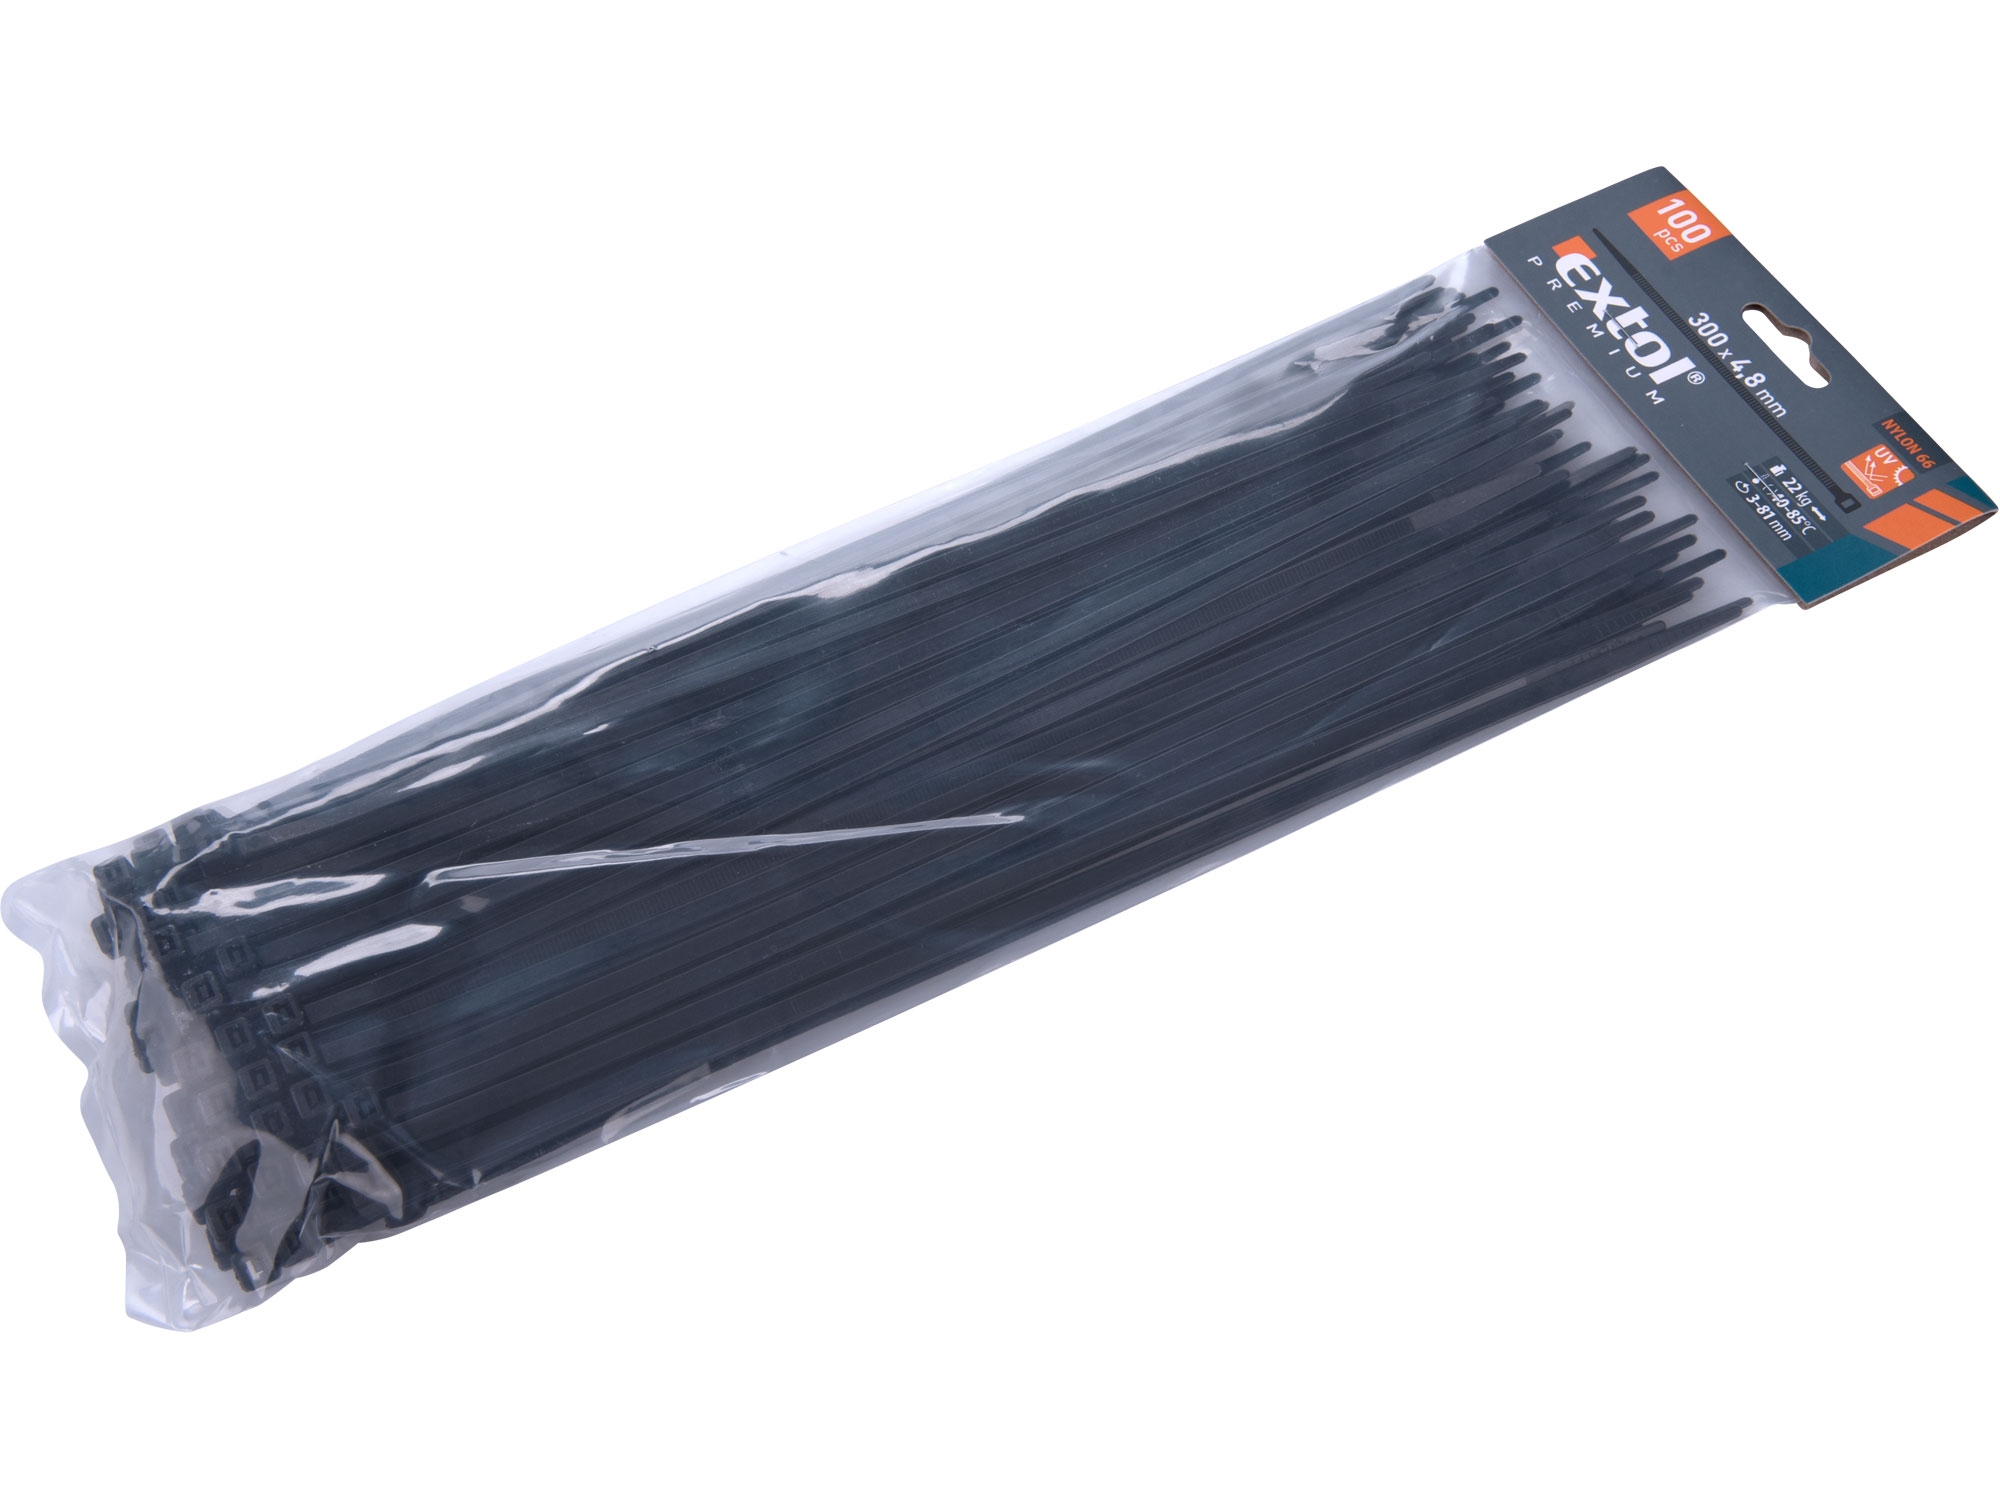 pásky stahovací černé, 300x4,8mm, 100ks, nylon, EXTOL PREMIUM 8856162